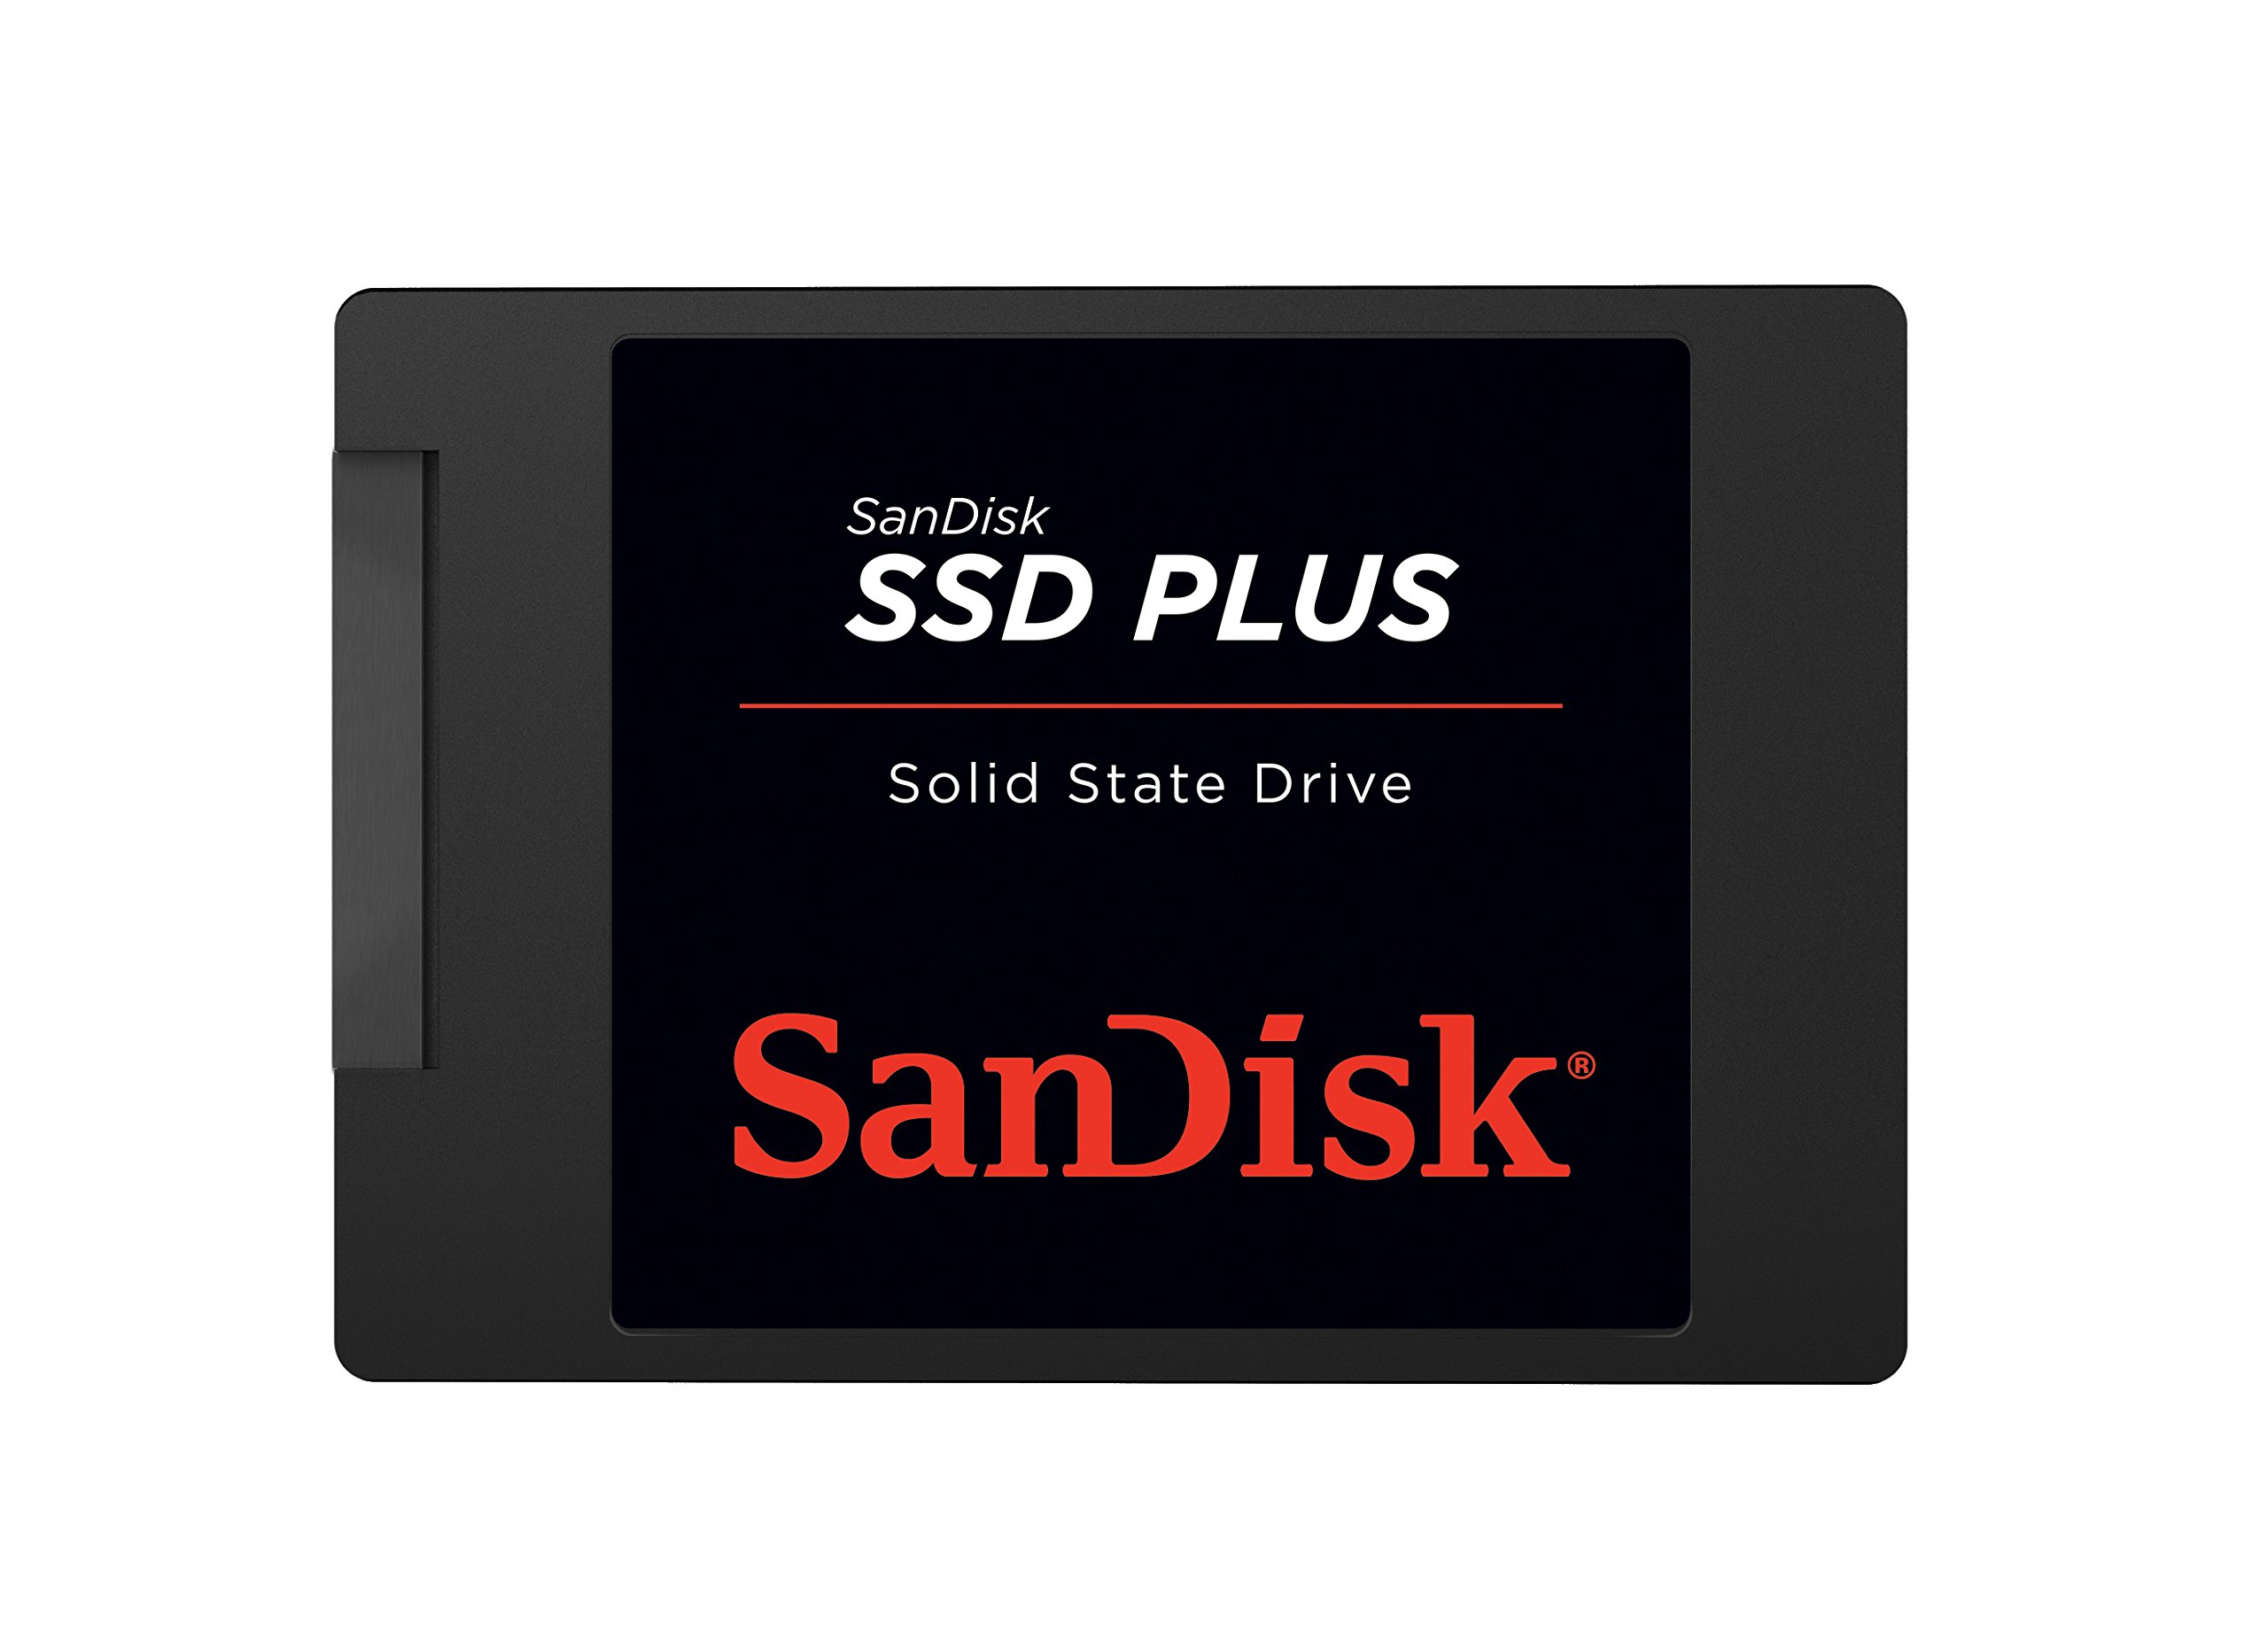 1TB SanDisk SSD PLUS Internal SSD (SDSSDA-1T00-G26) $44 + Free Shipping